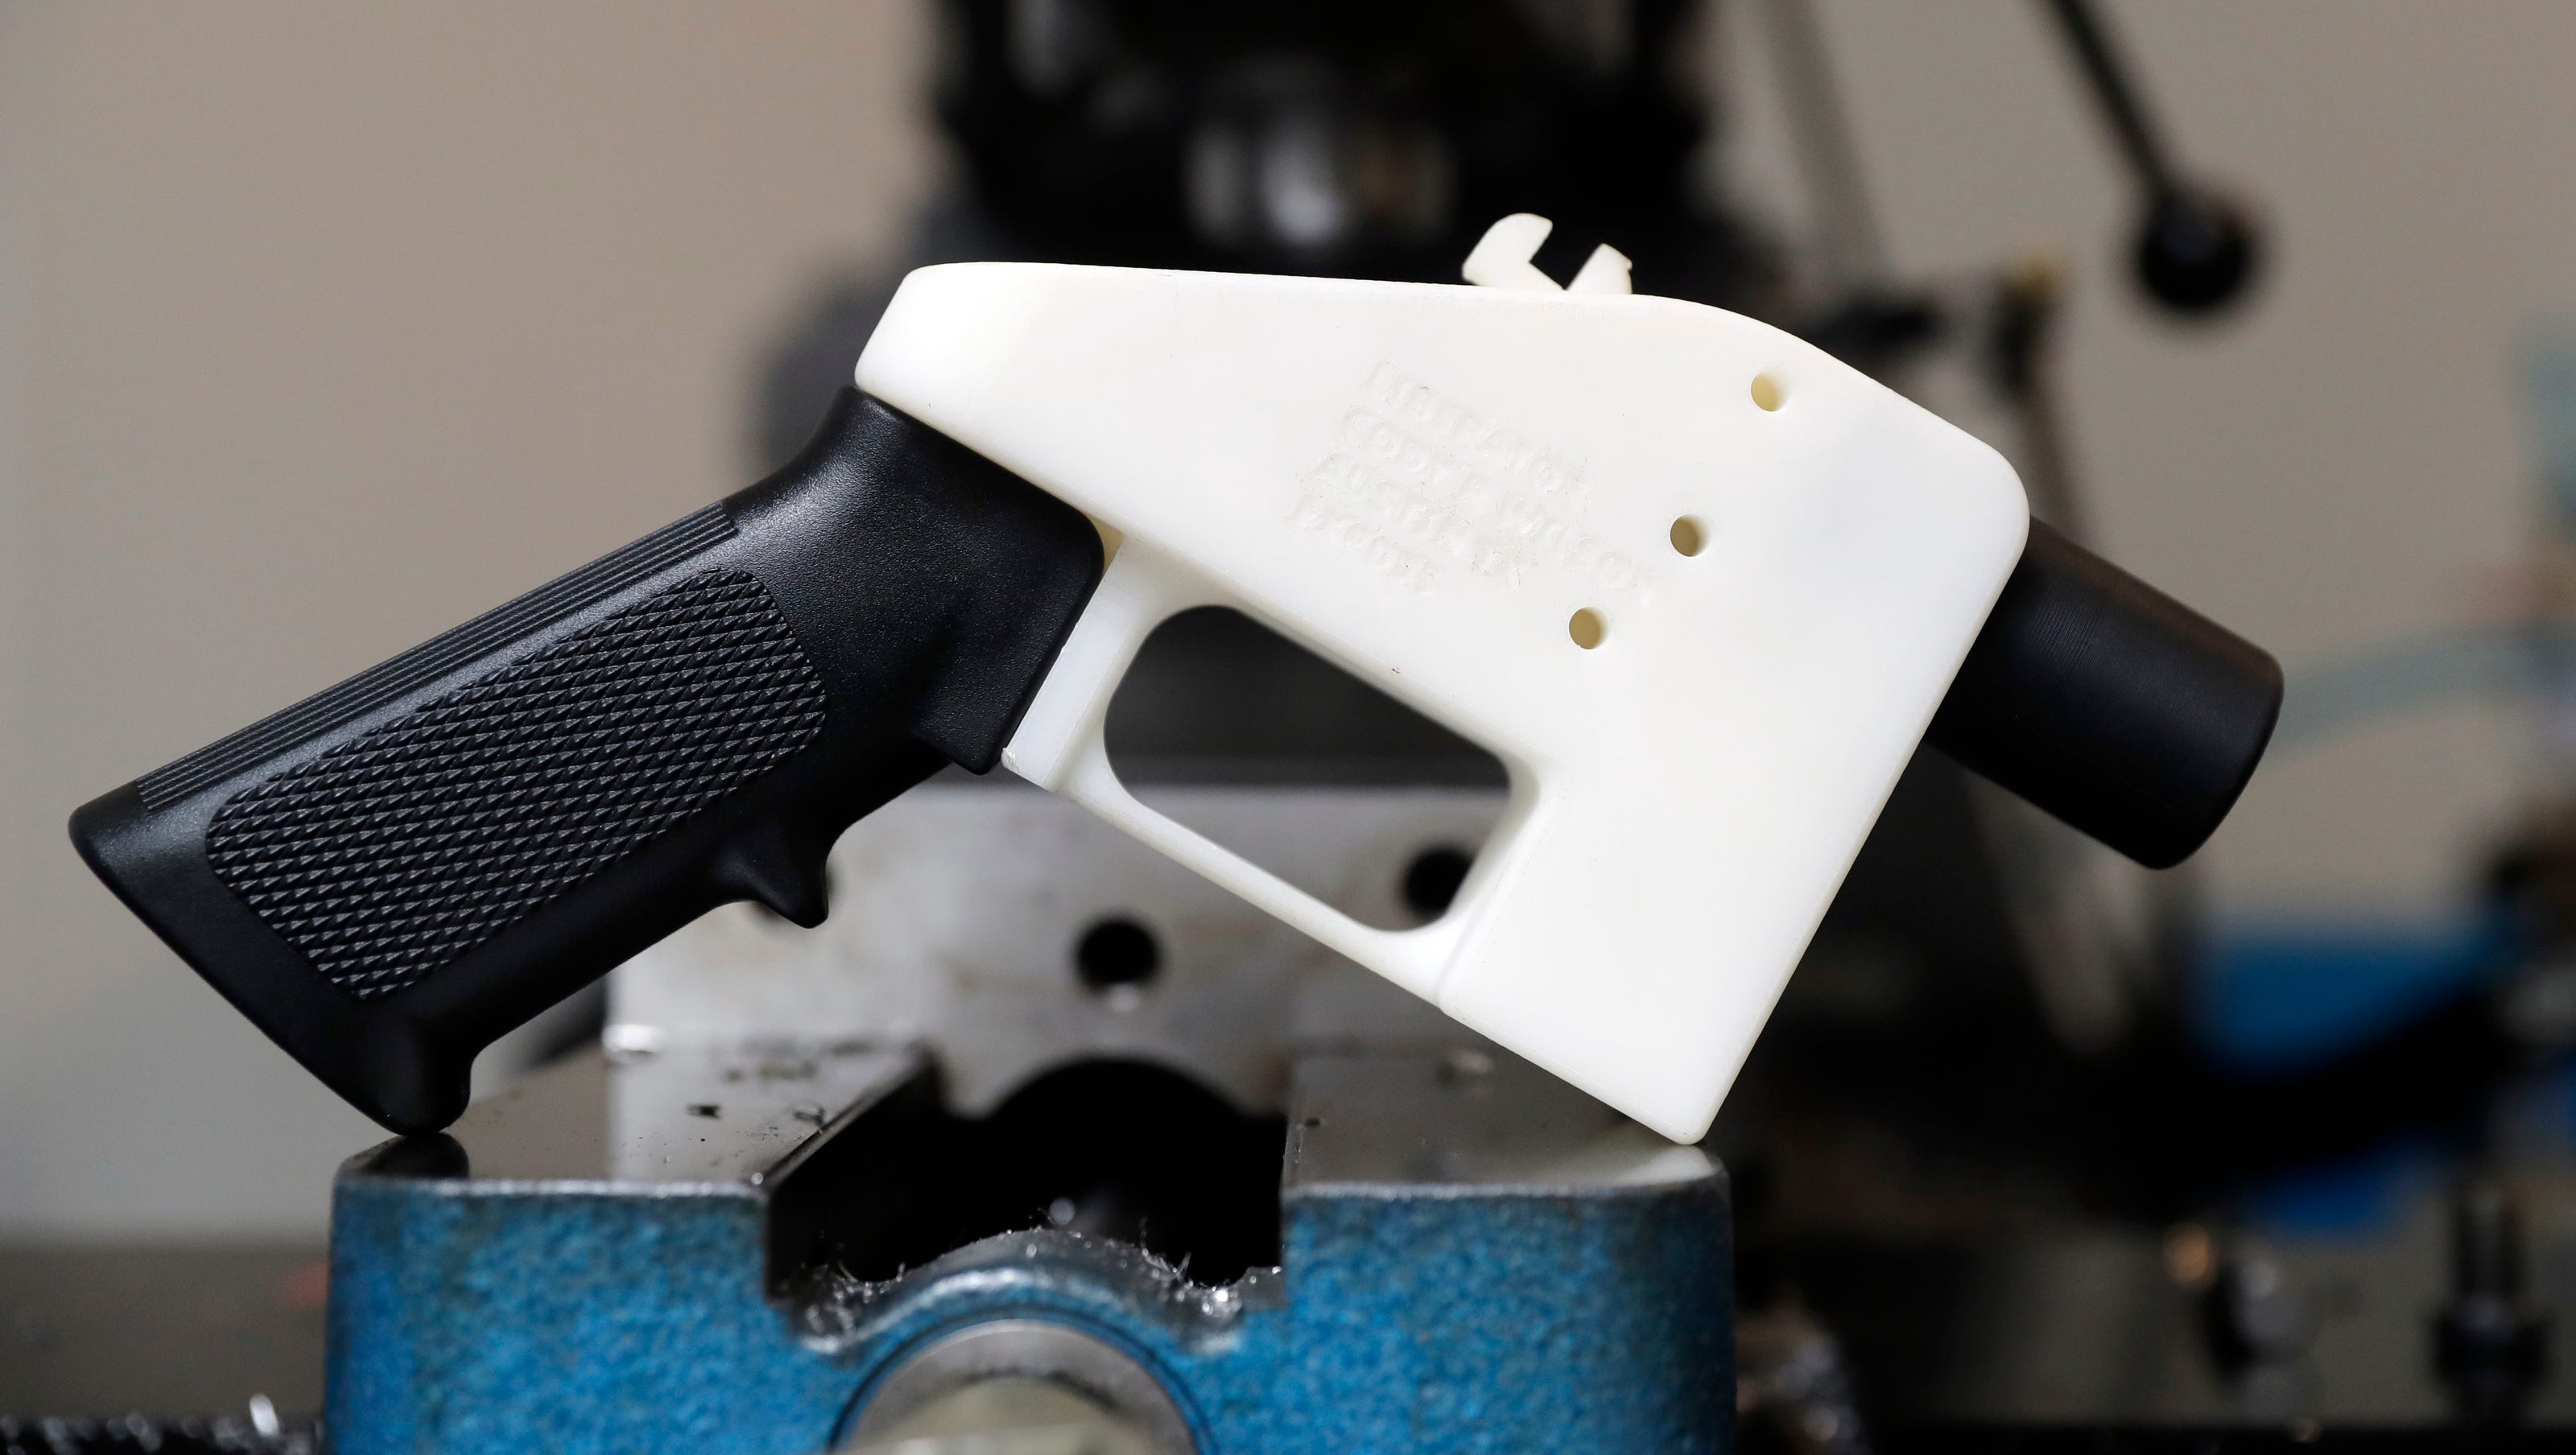 3d Gun Printing Cody Wilson Exposes Loophole In Gun Control